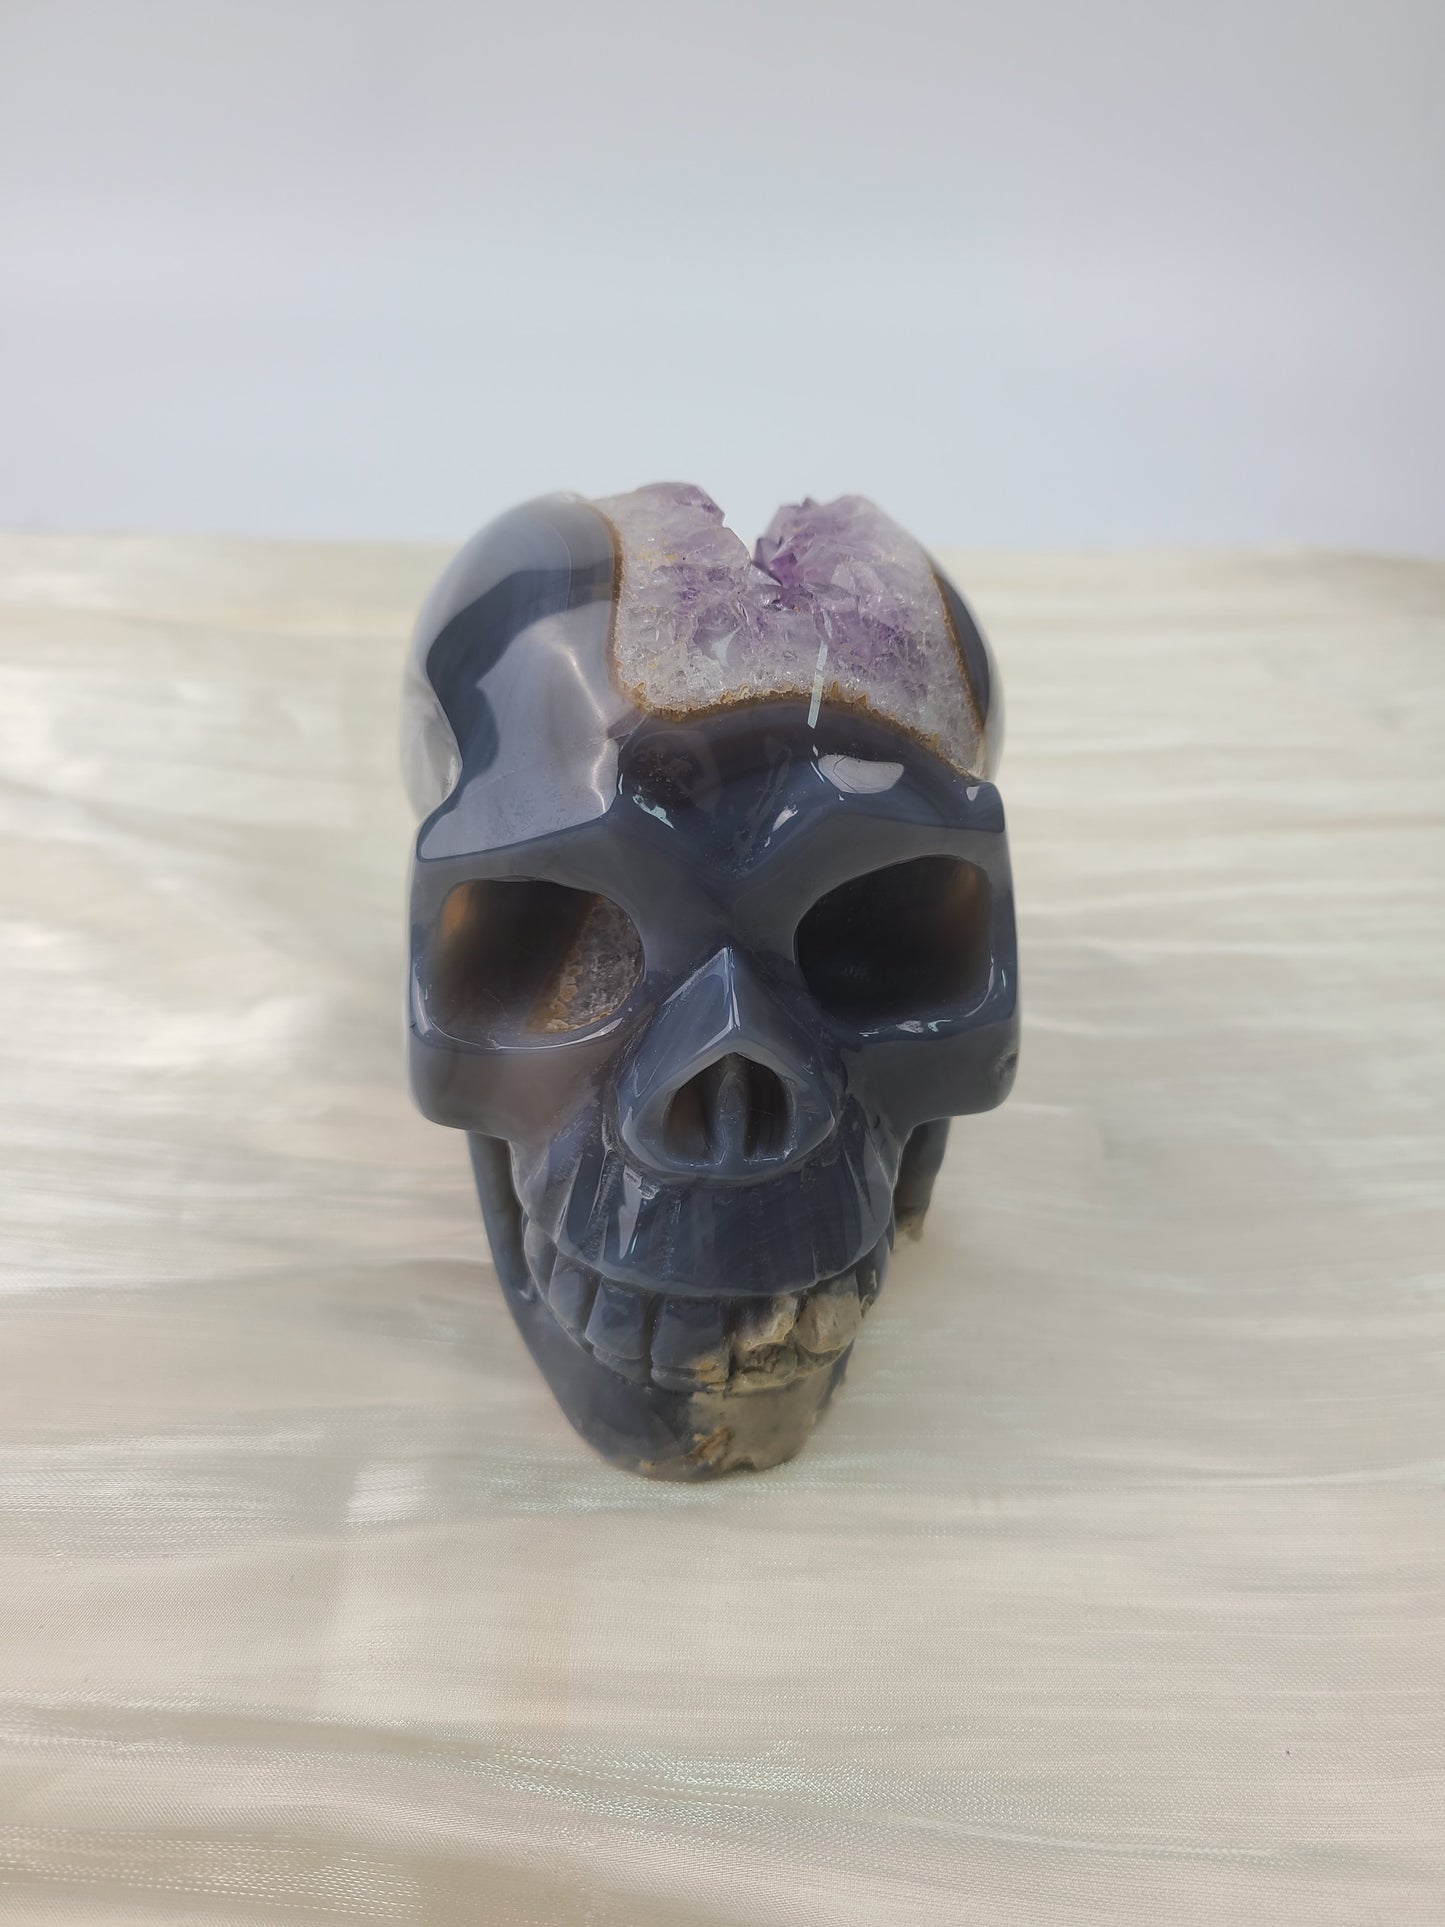 Druzy agate skull